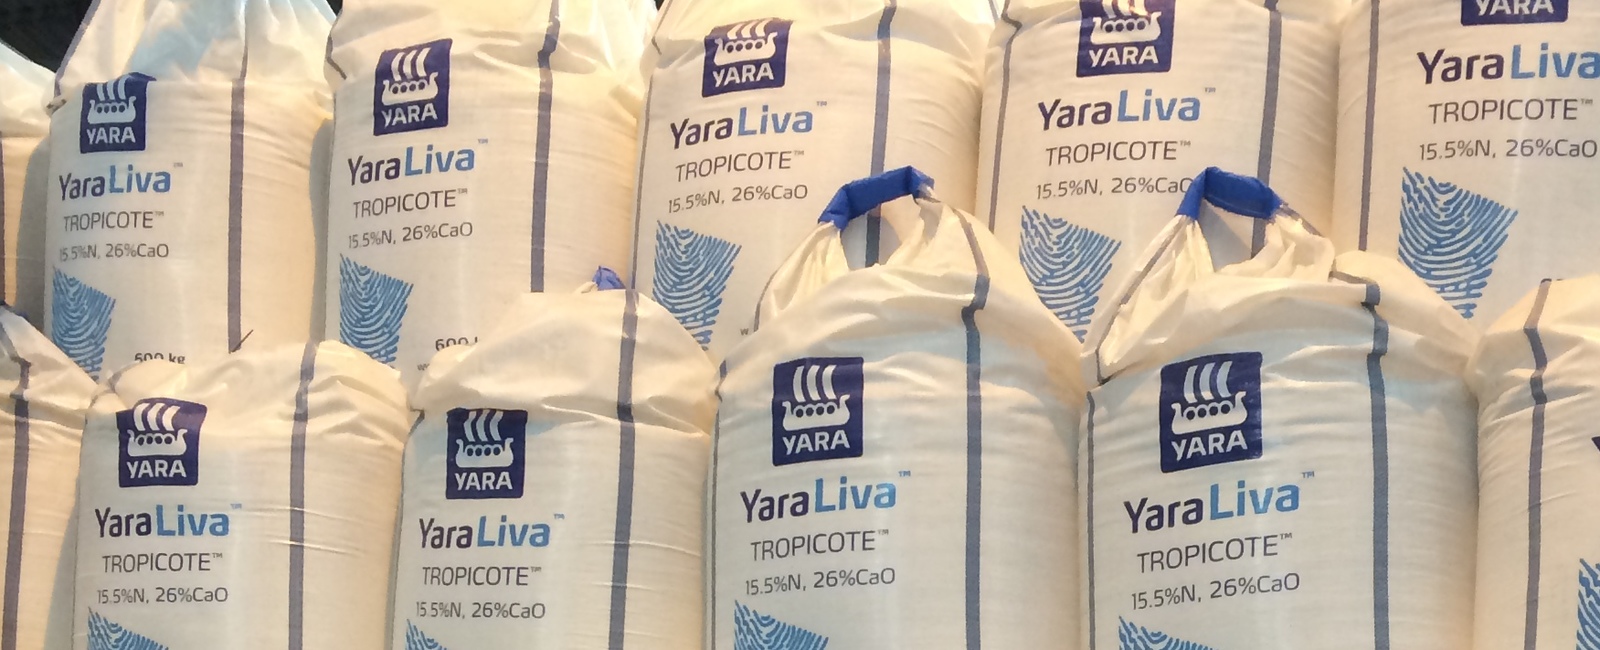 YaraLiva- Nitrate de calcium